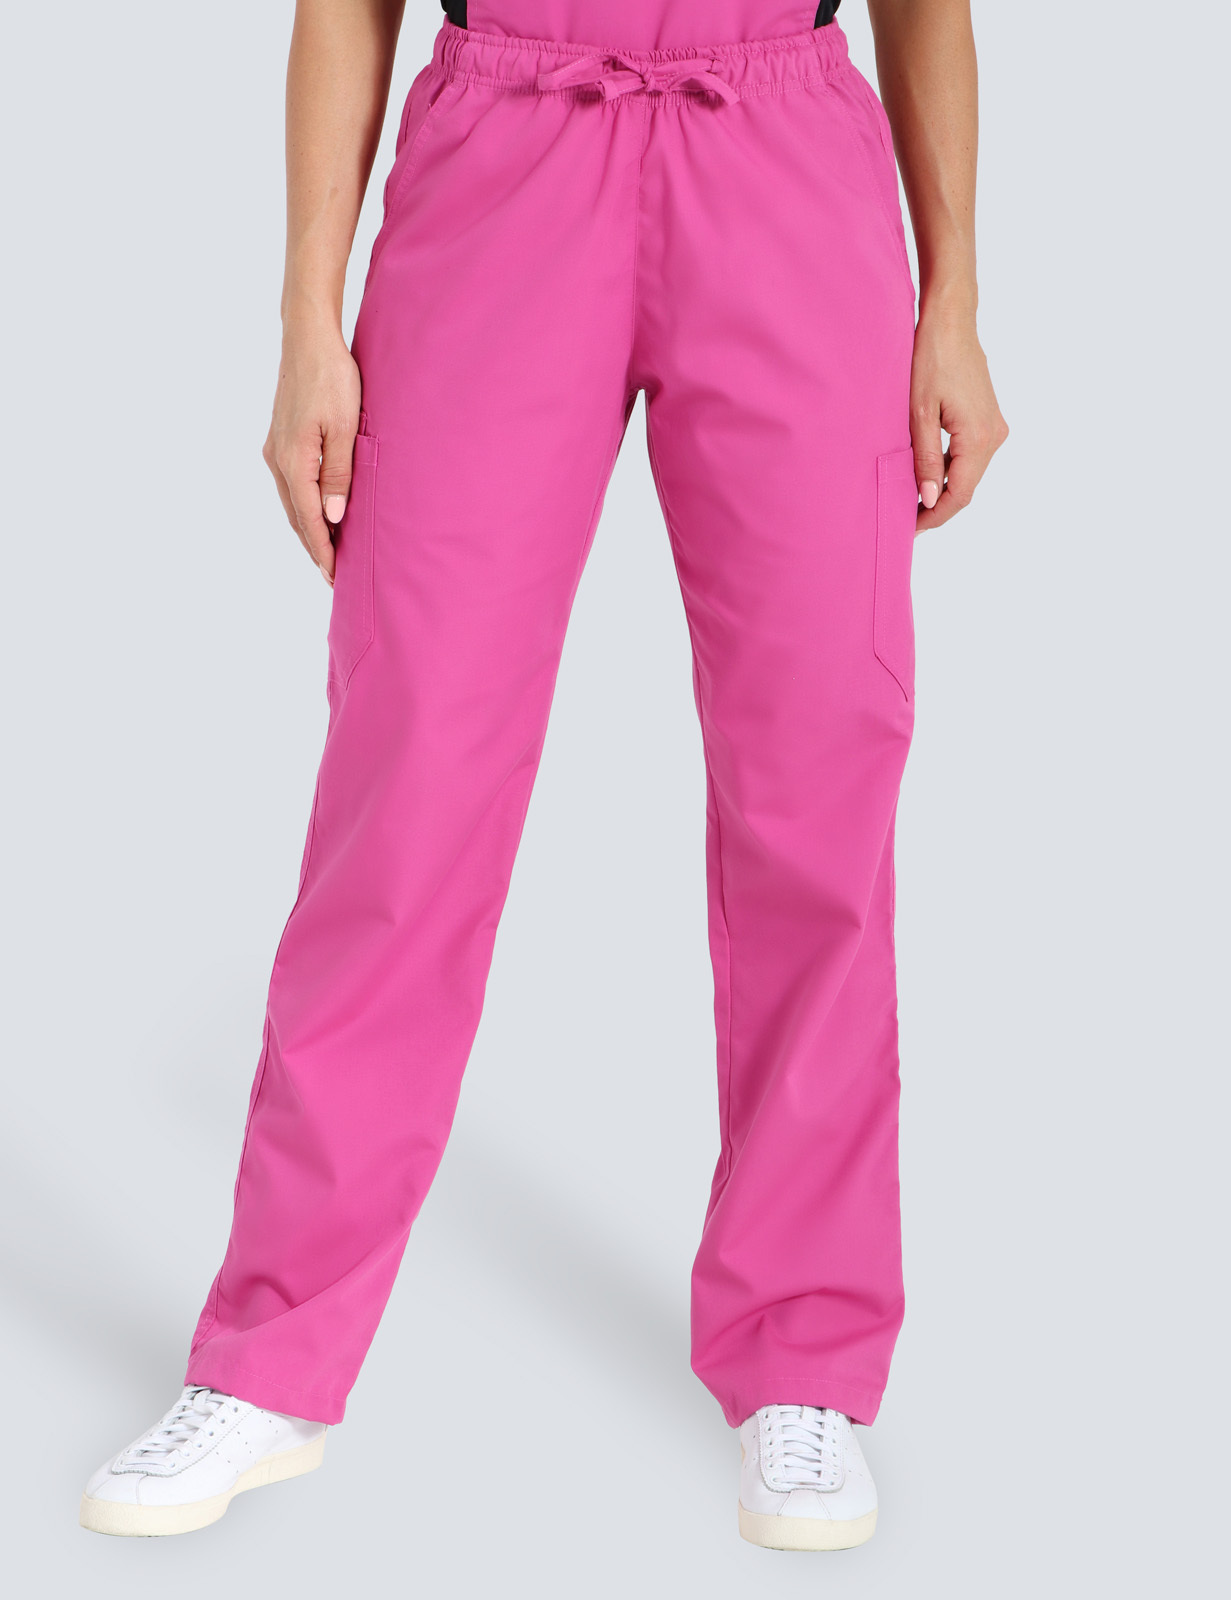 Women's Cargo Performance Pants - Pink - X Large